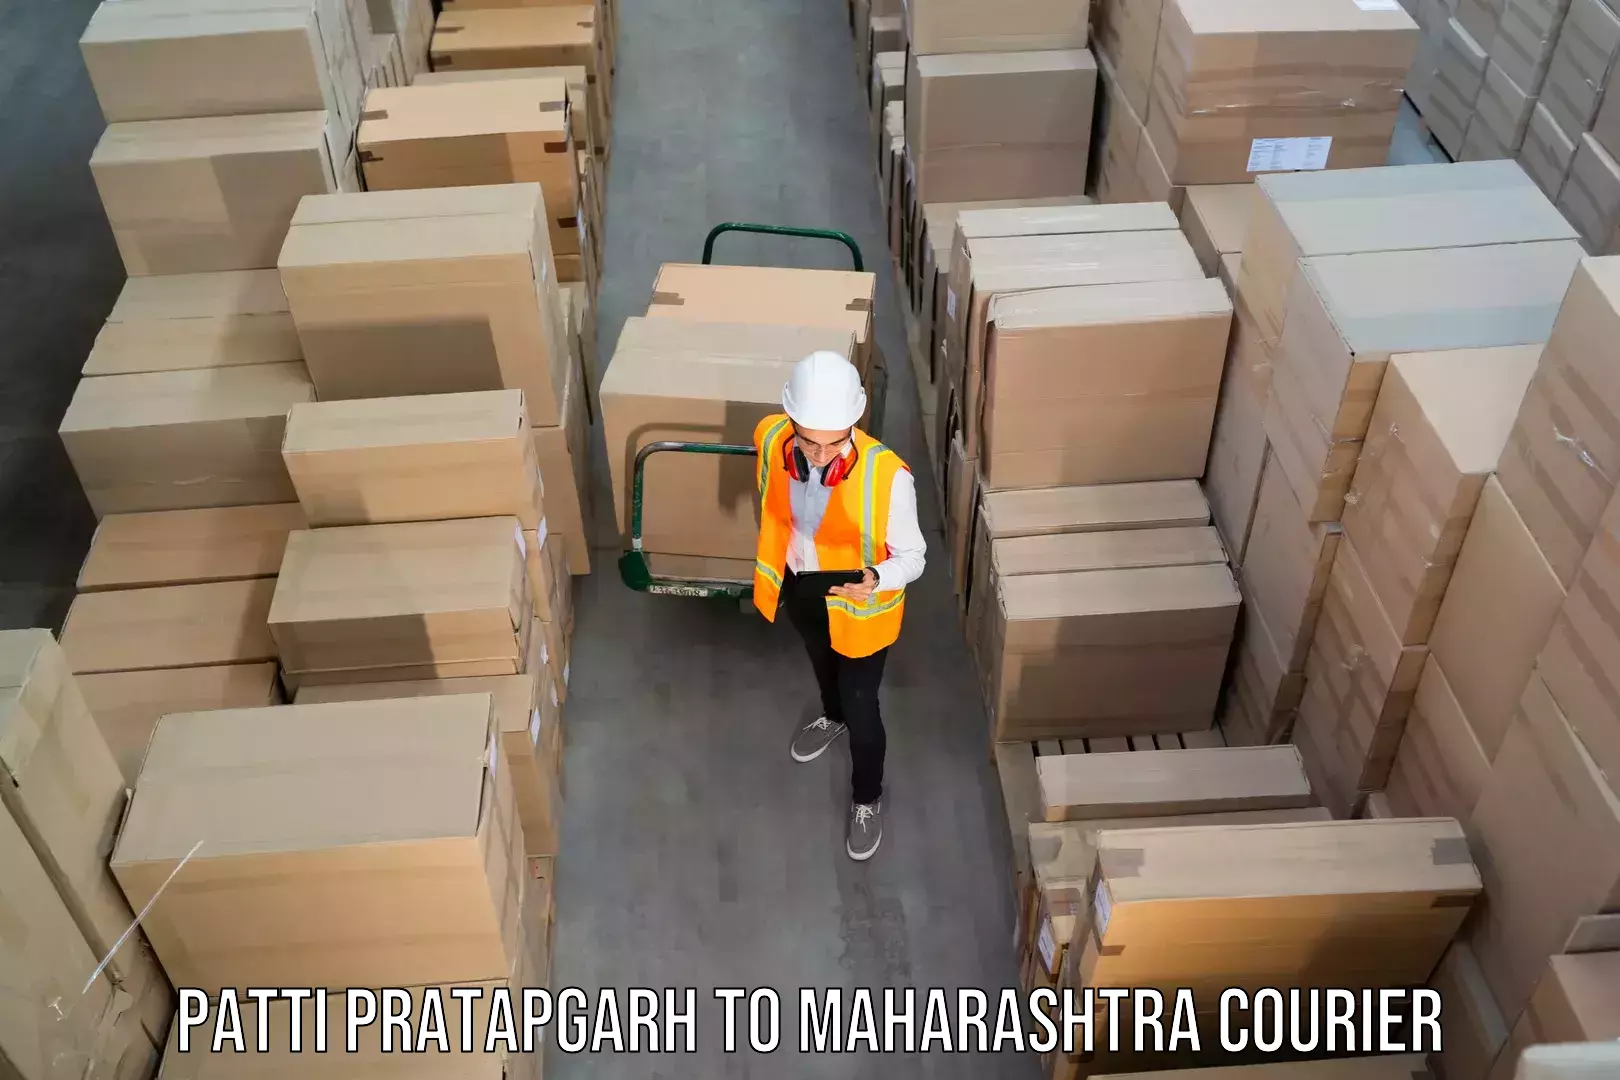 Cash on delivery service Patti Pratapgarh to Nagpur